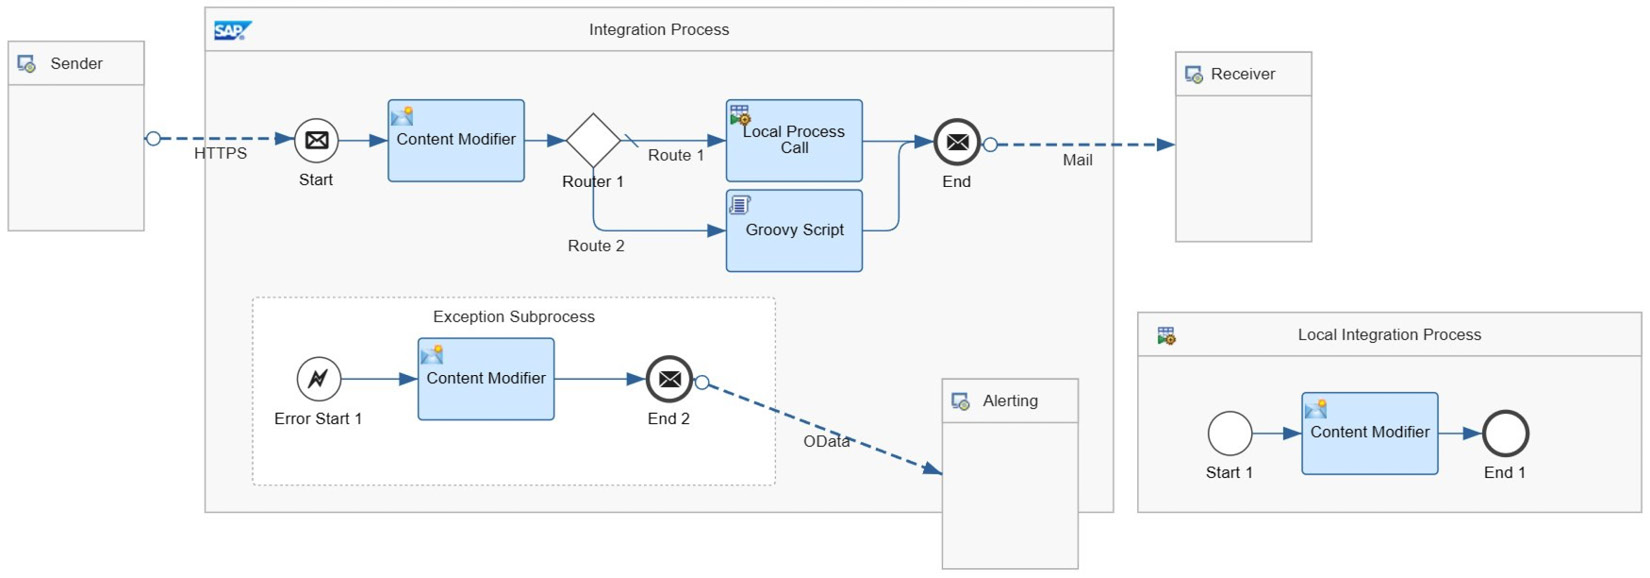 Figure 7.1: An integration flow designed in SAP Integration Suite’s Cloud Integration
